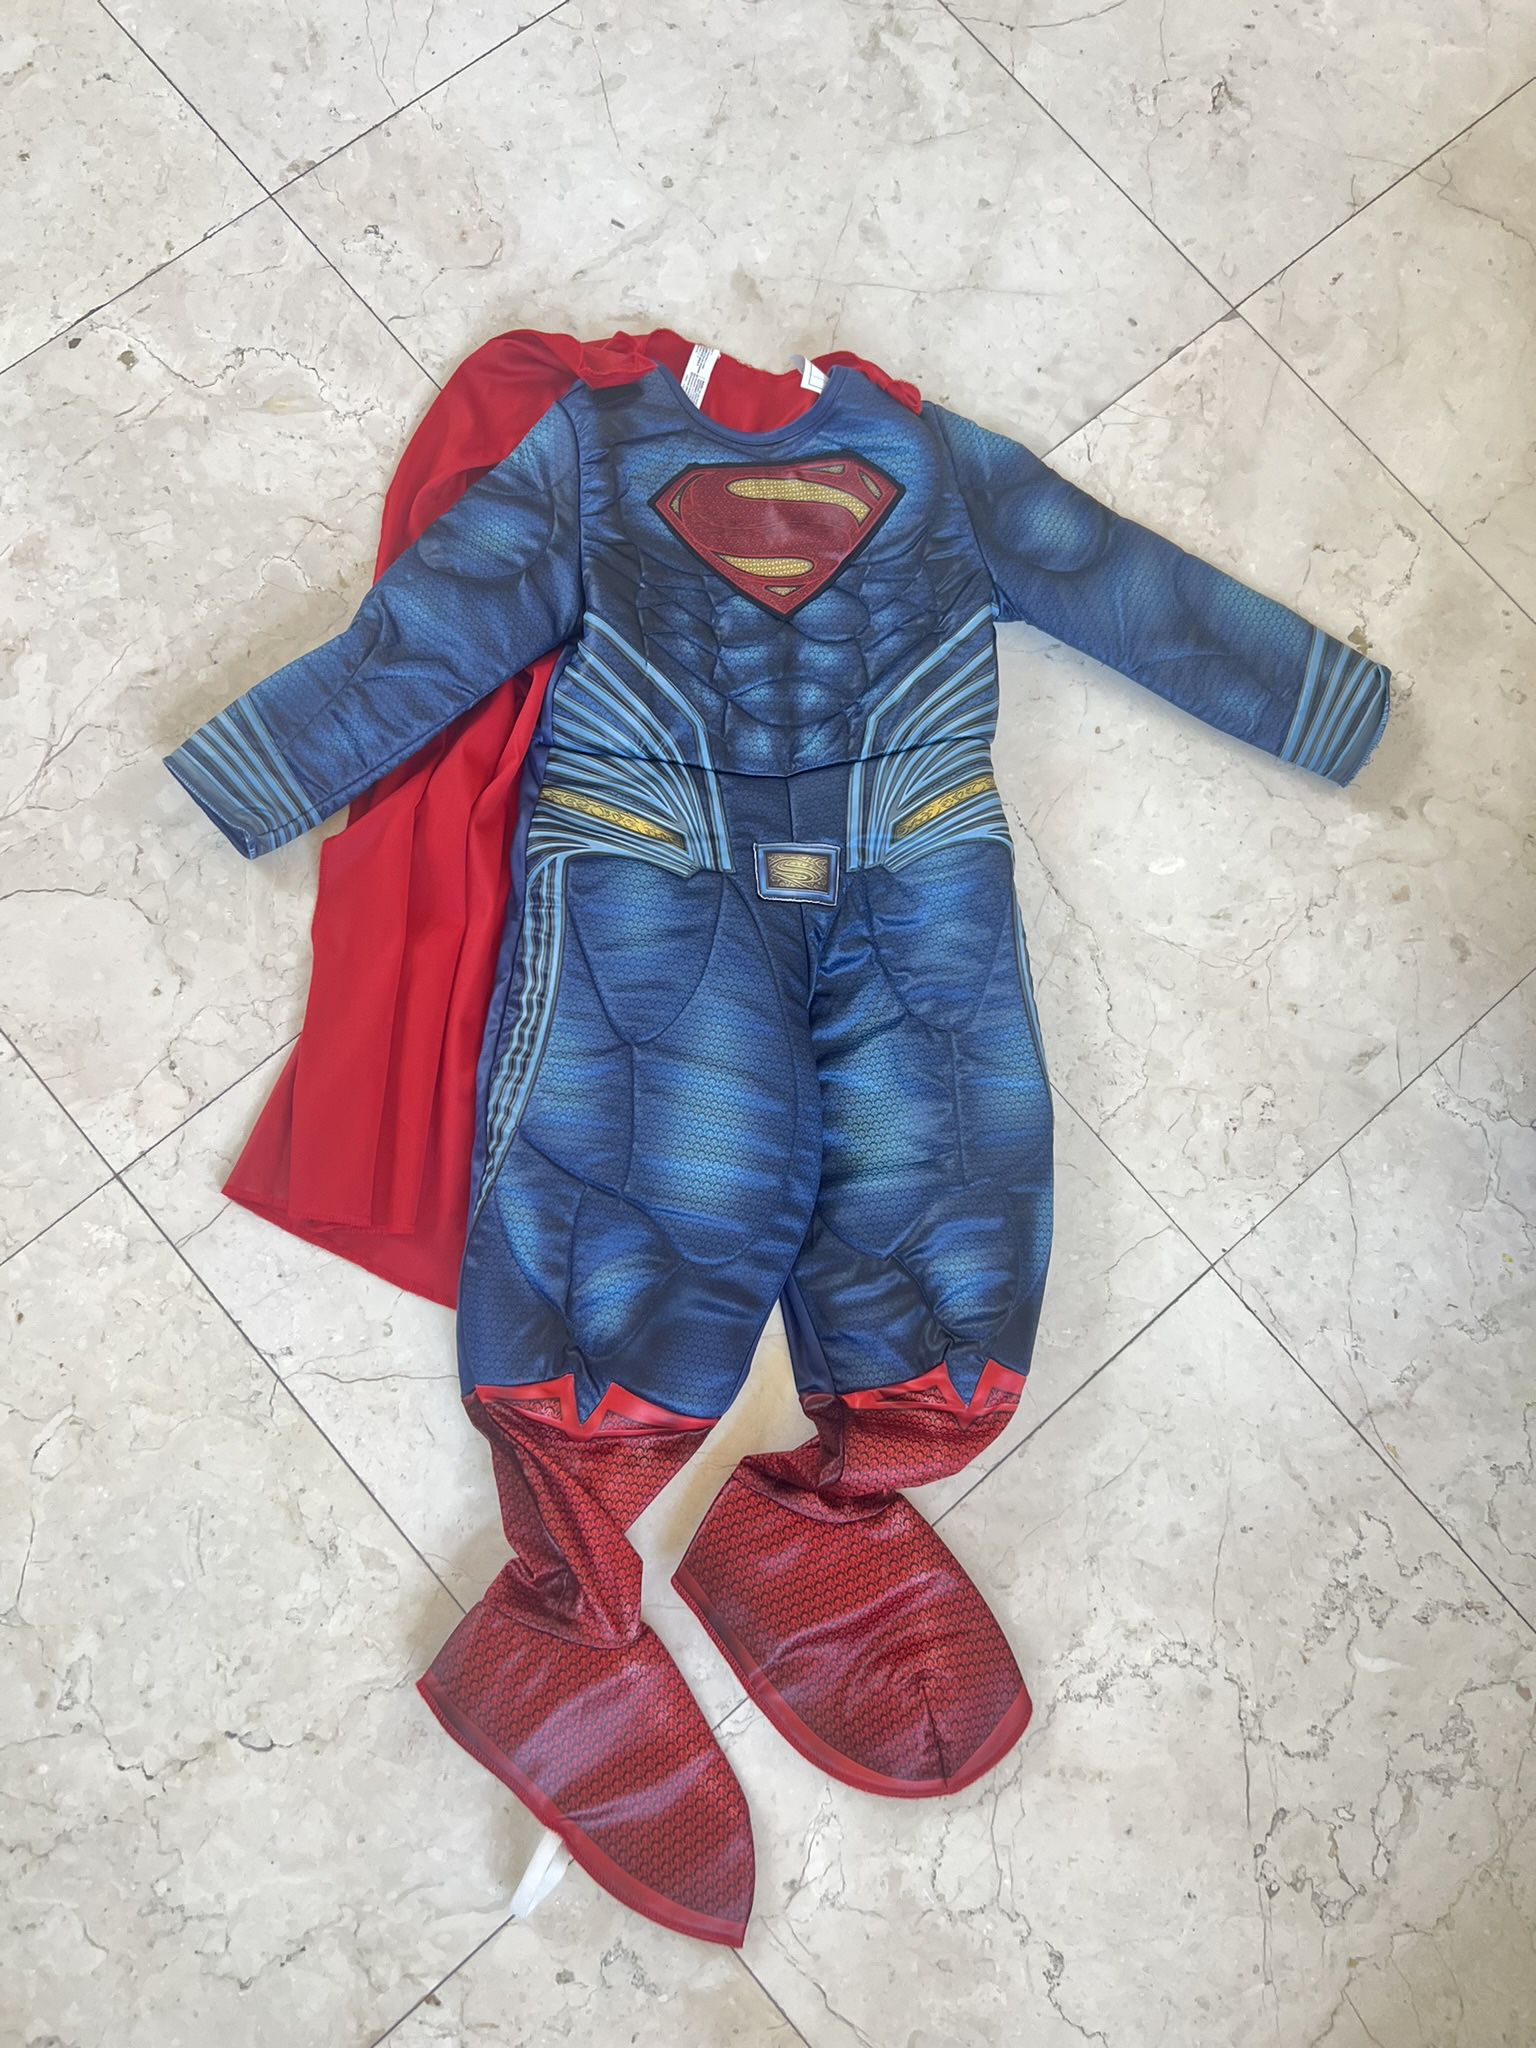  New Kids Justice SUPERMAN costume